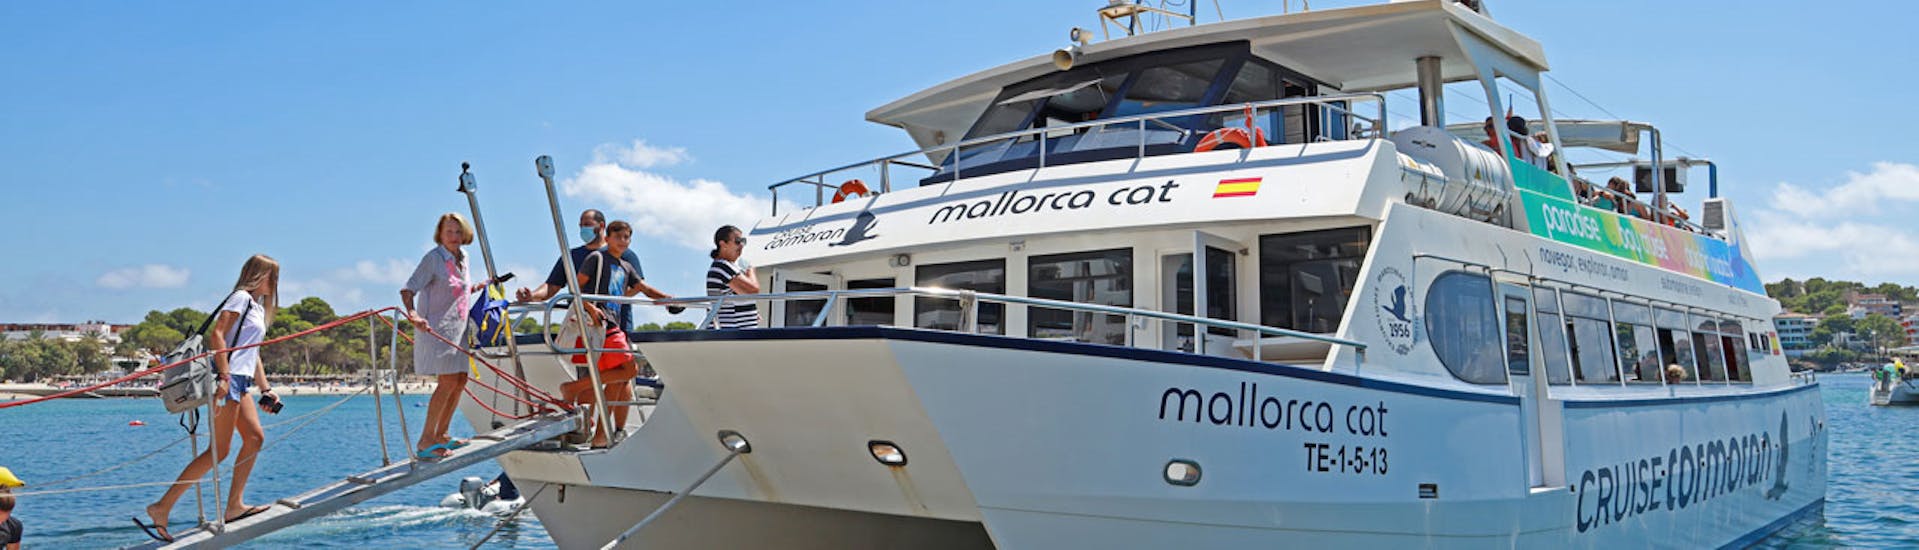 Balade en catamaran Santa Ponsa avec Baignade & Visites touristiques.